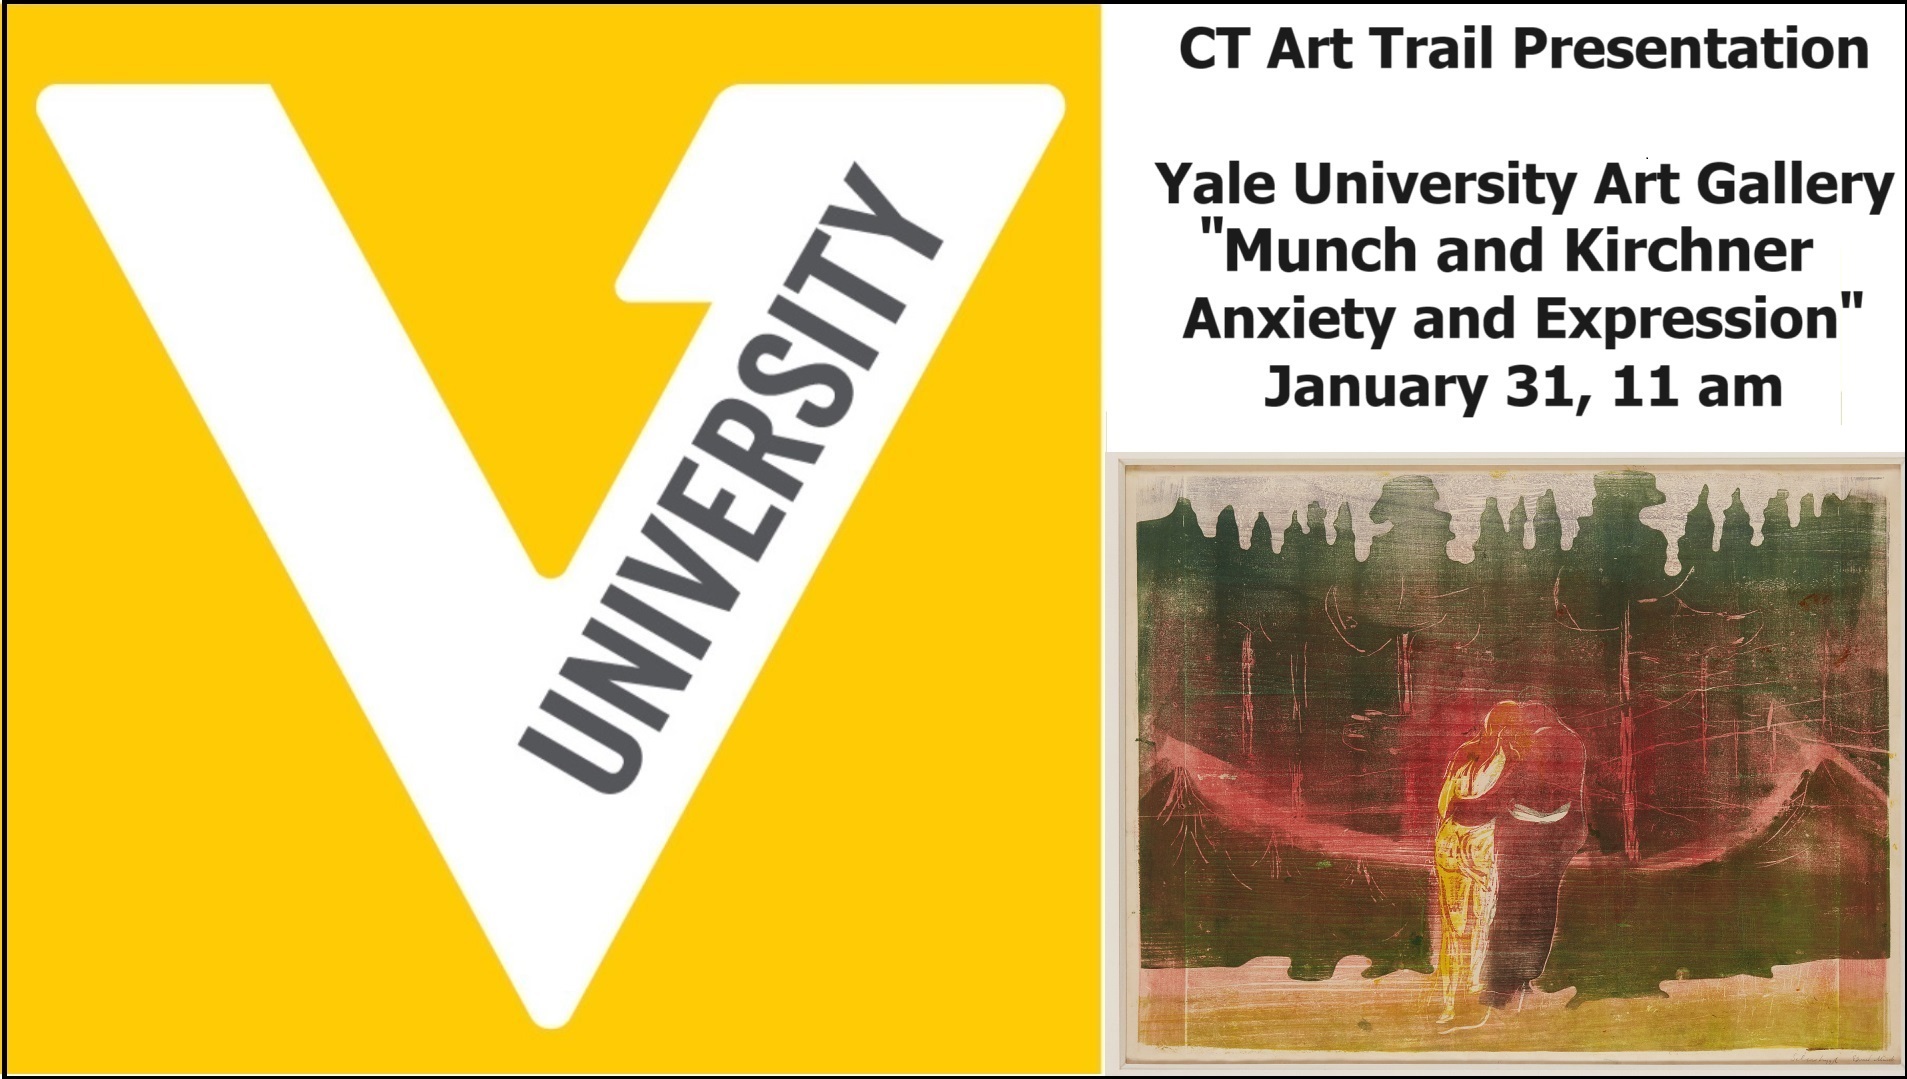 Yale University Art Gallery, CT Art Trail